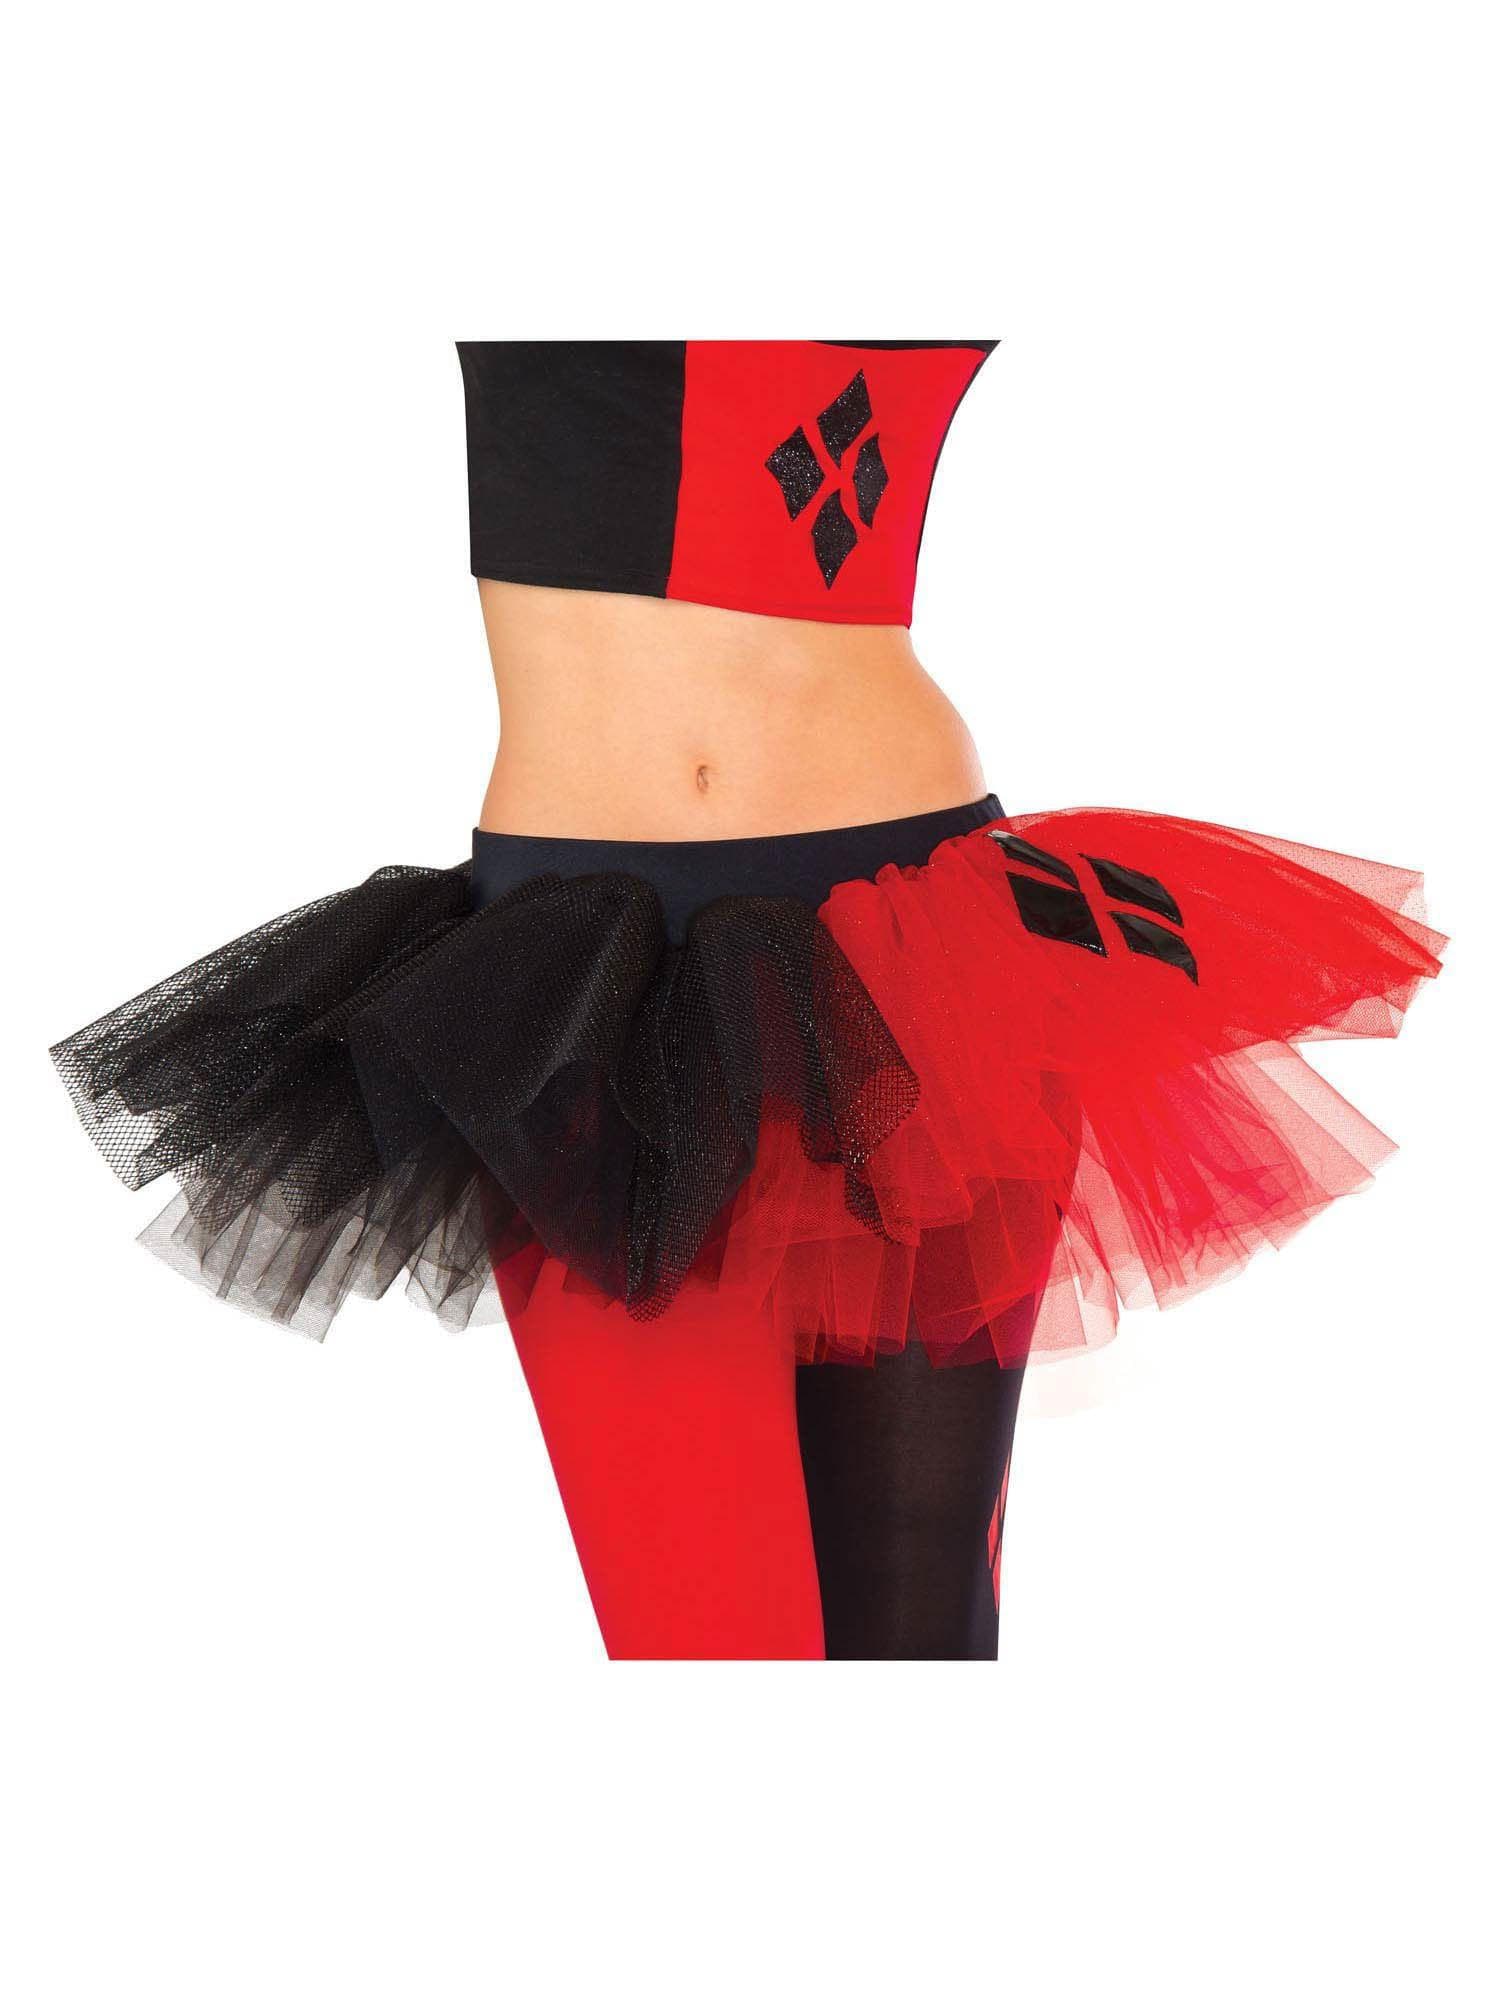 Women's Black and Red DC Comics Harley Quinn Tutu - costumes.com